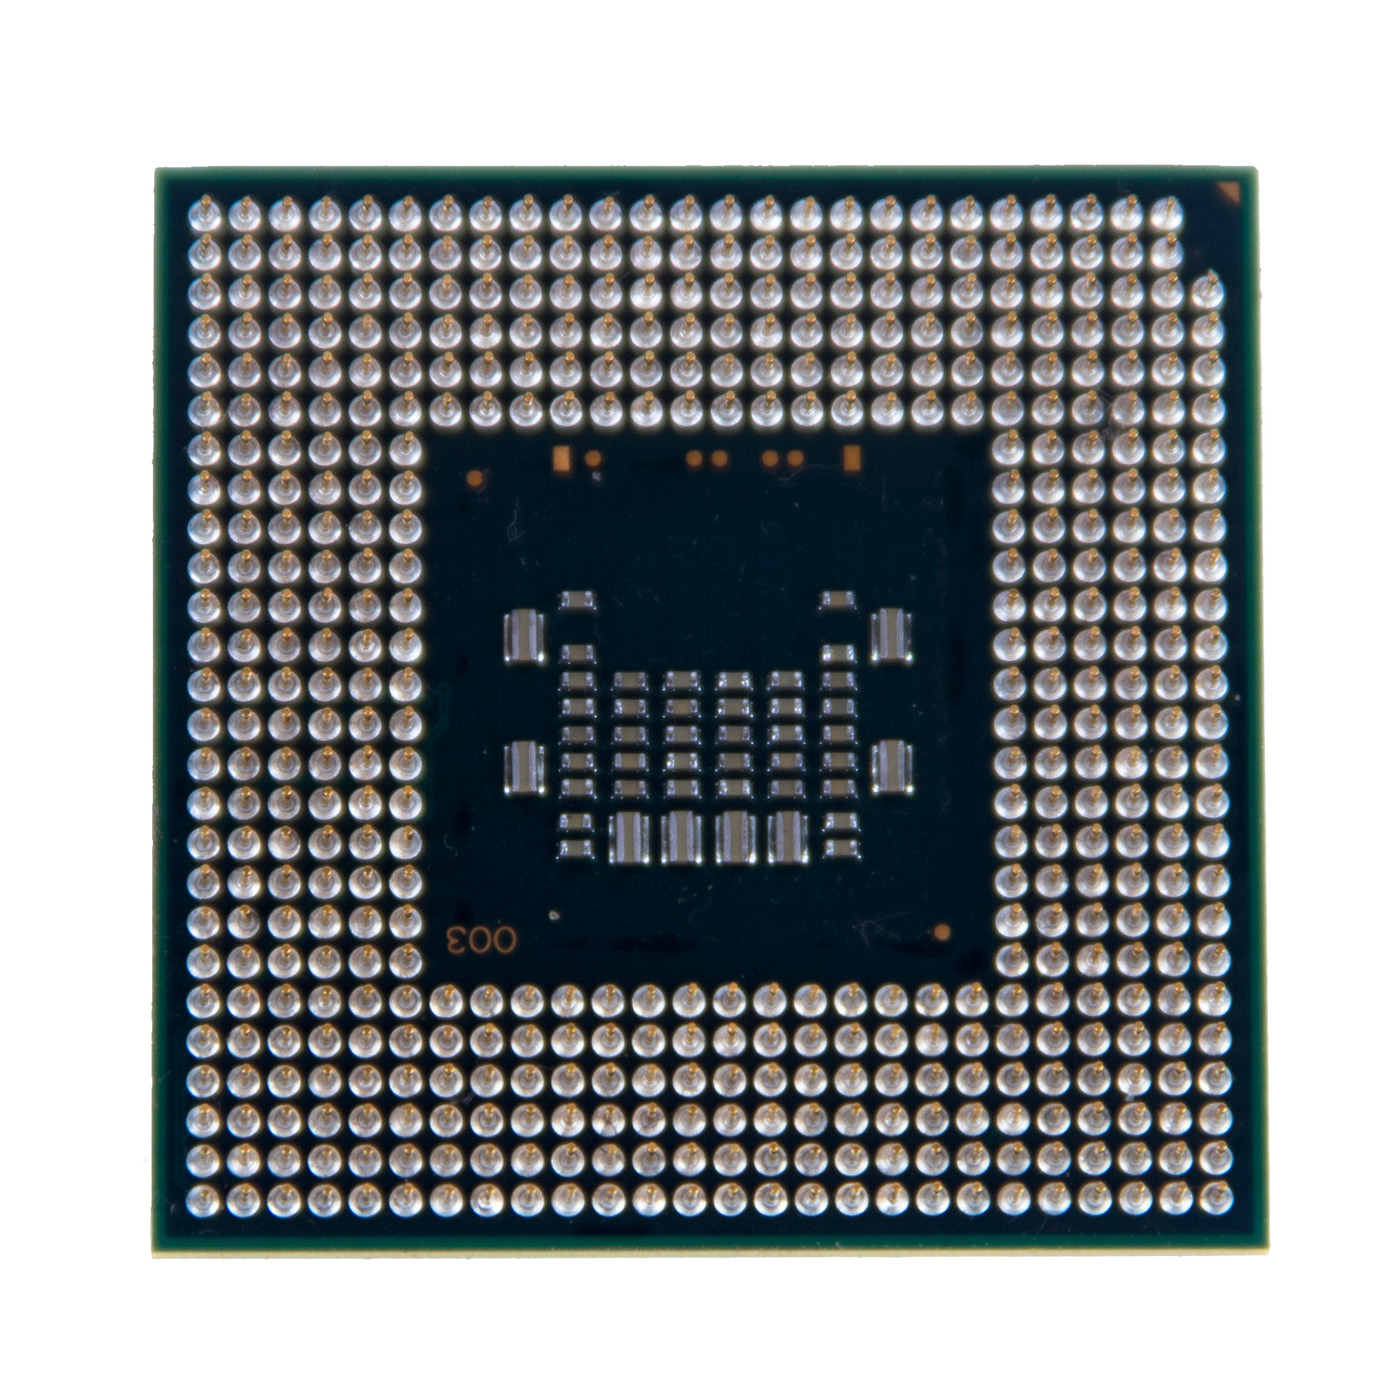 Procesor Intel Core 2 Duo T5450 2x1.67 GHz SLA4F